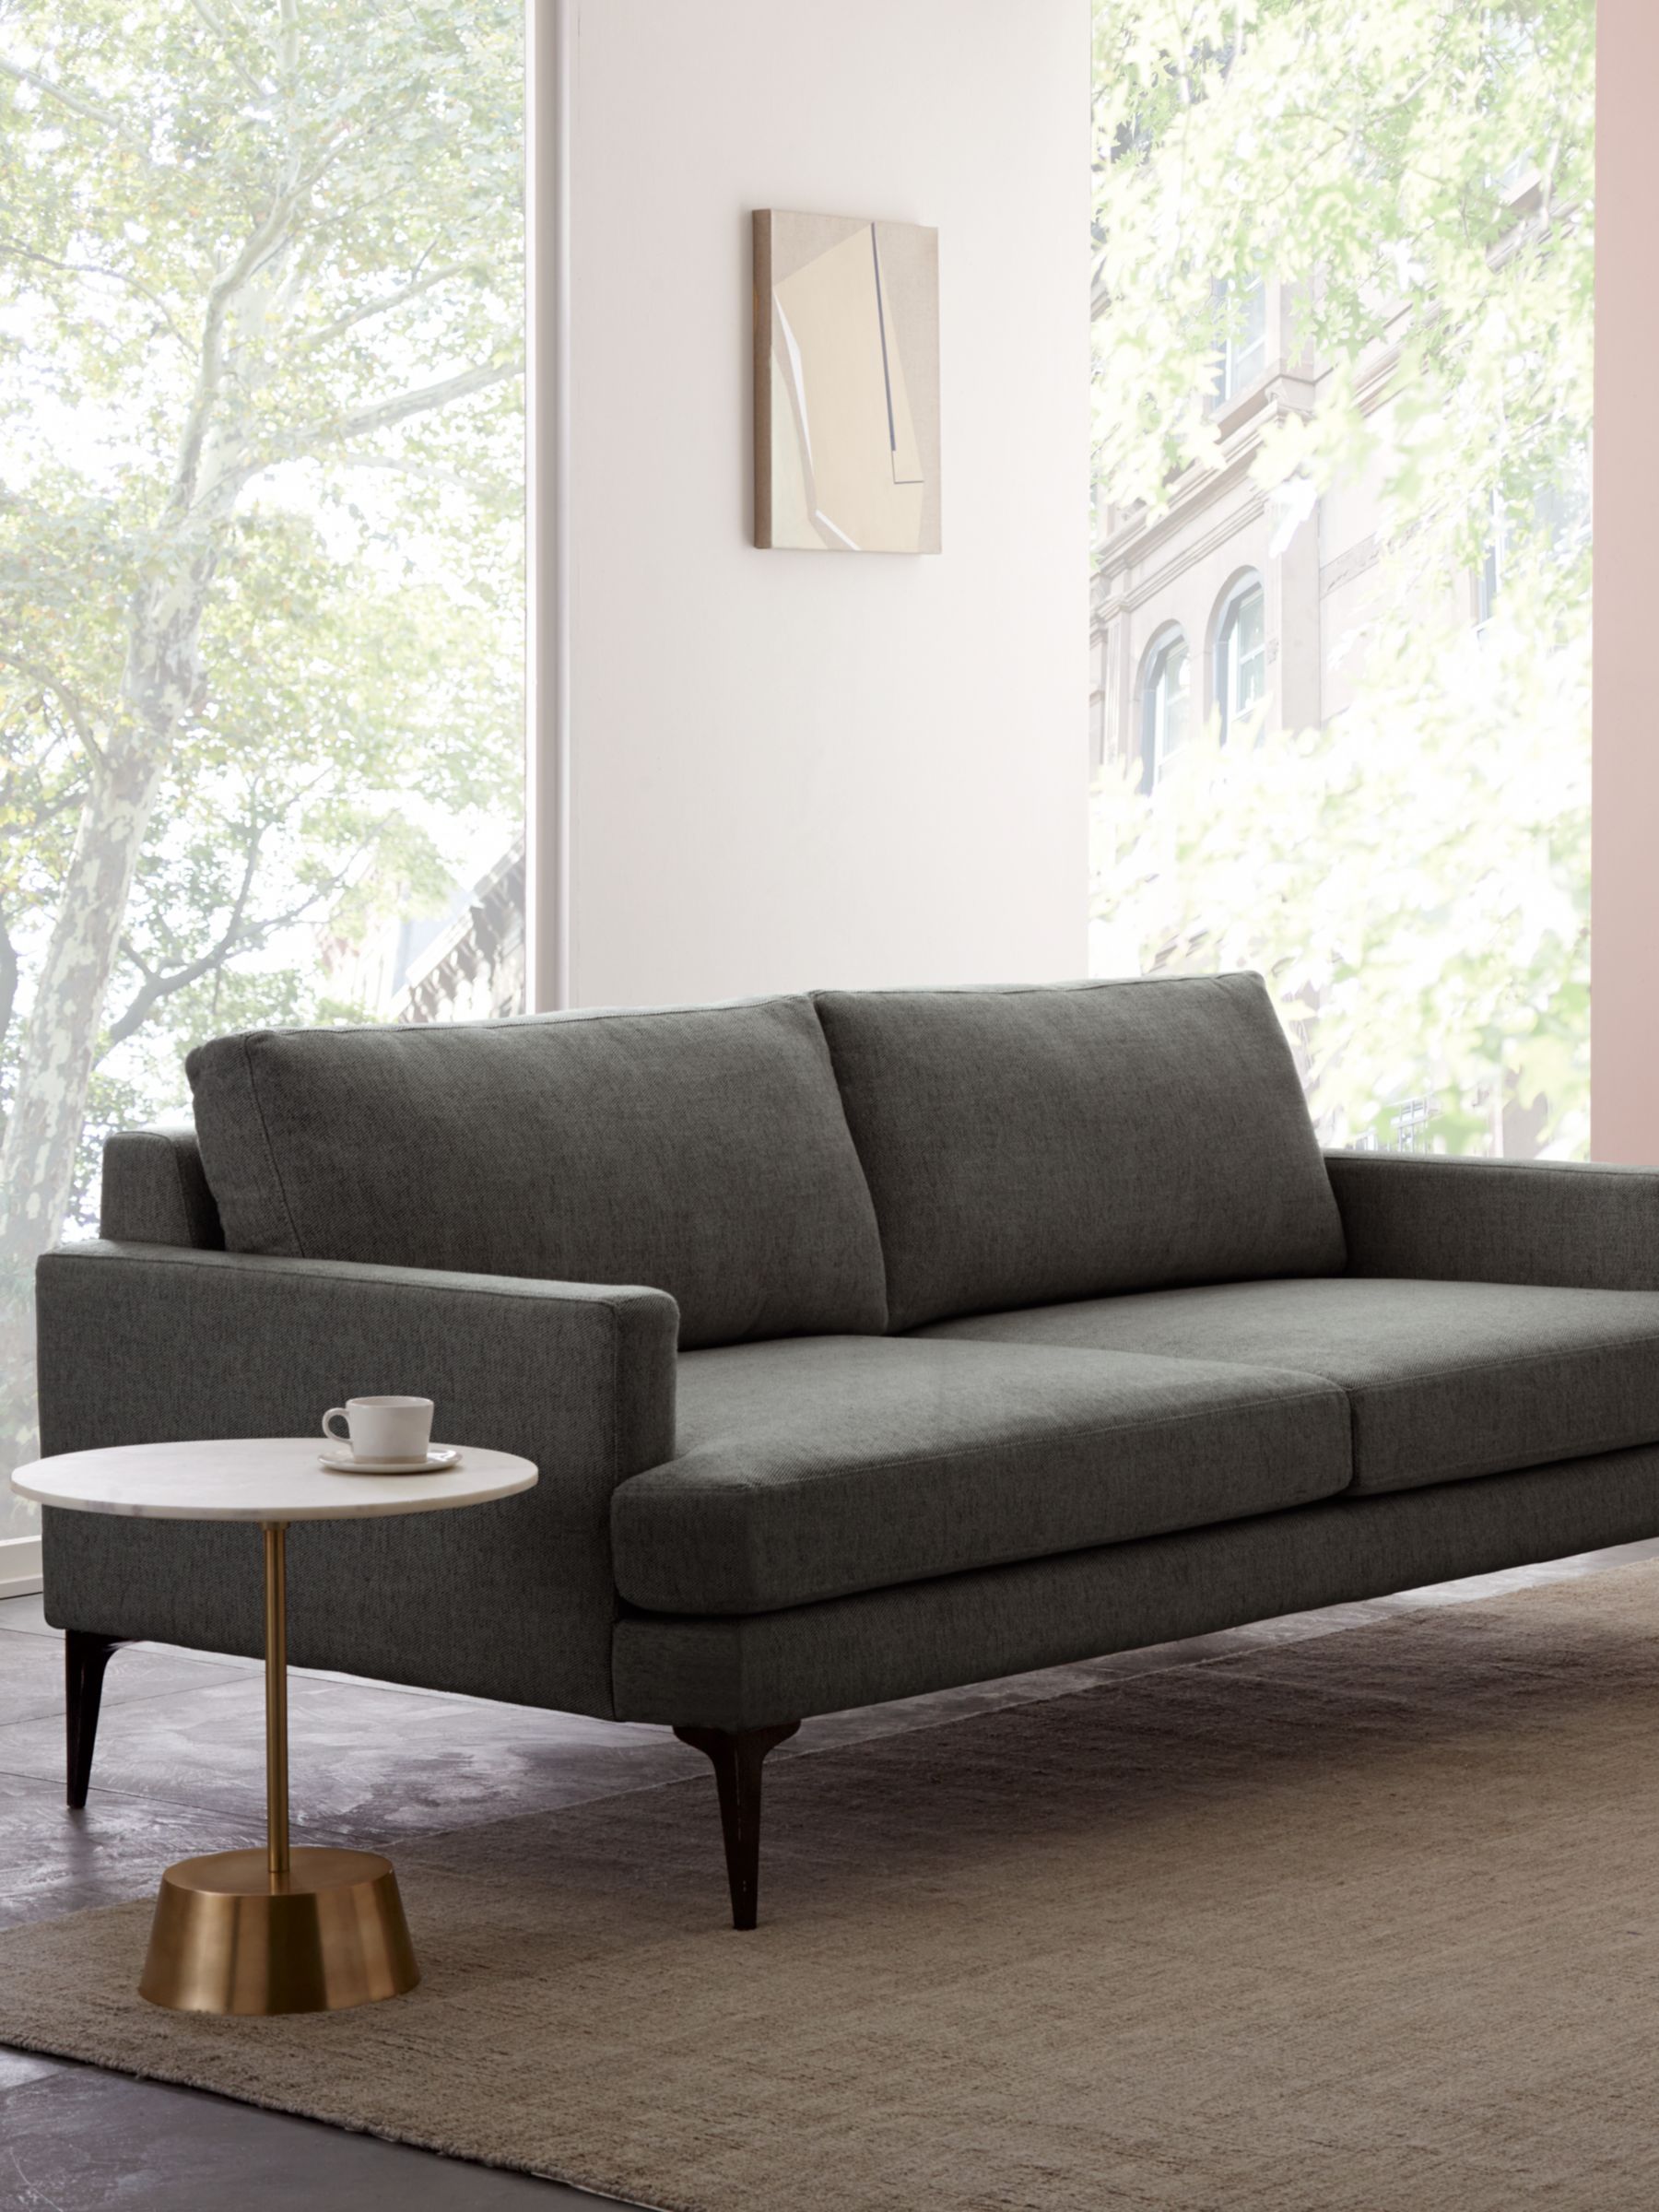 West Elm Andes Sofa Review | Review Home Decor